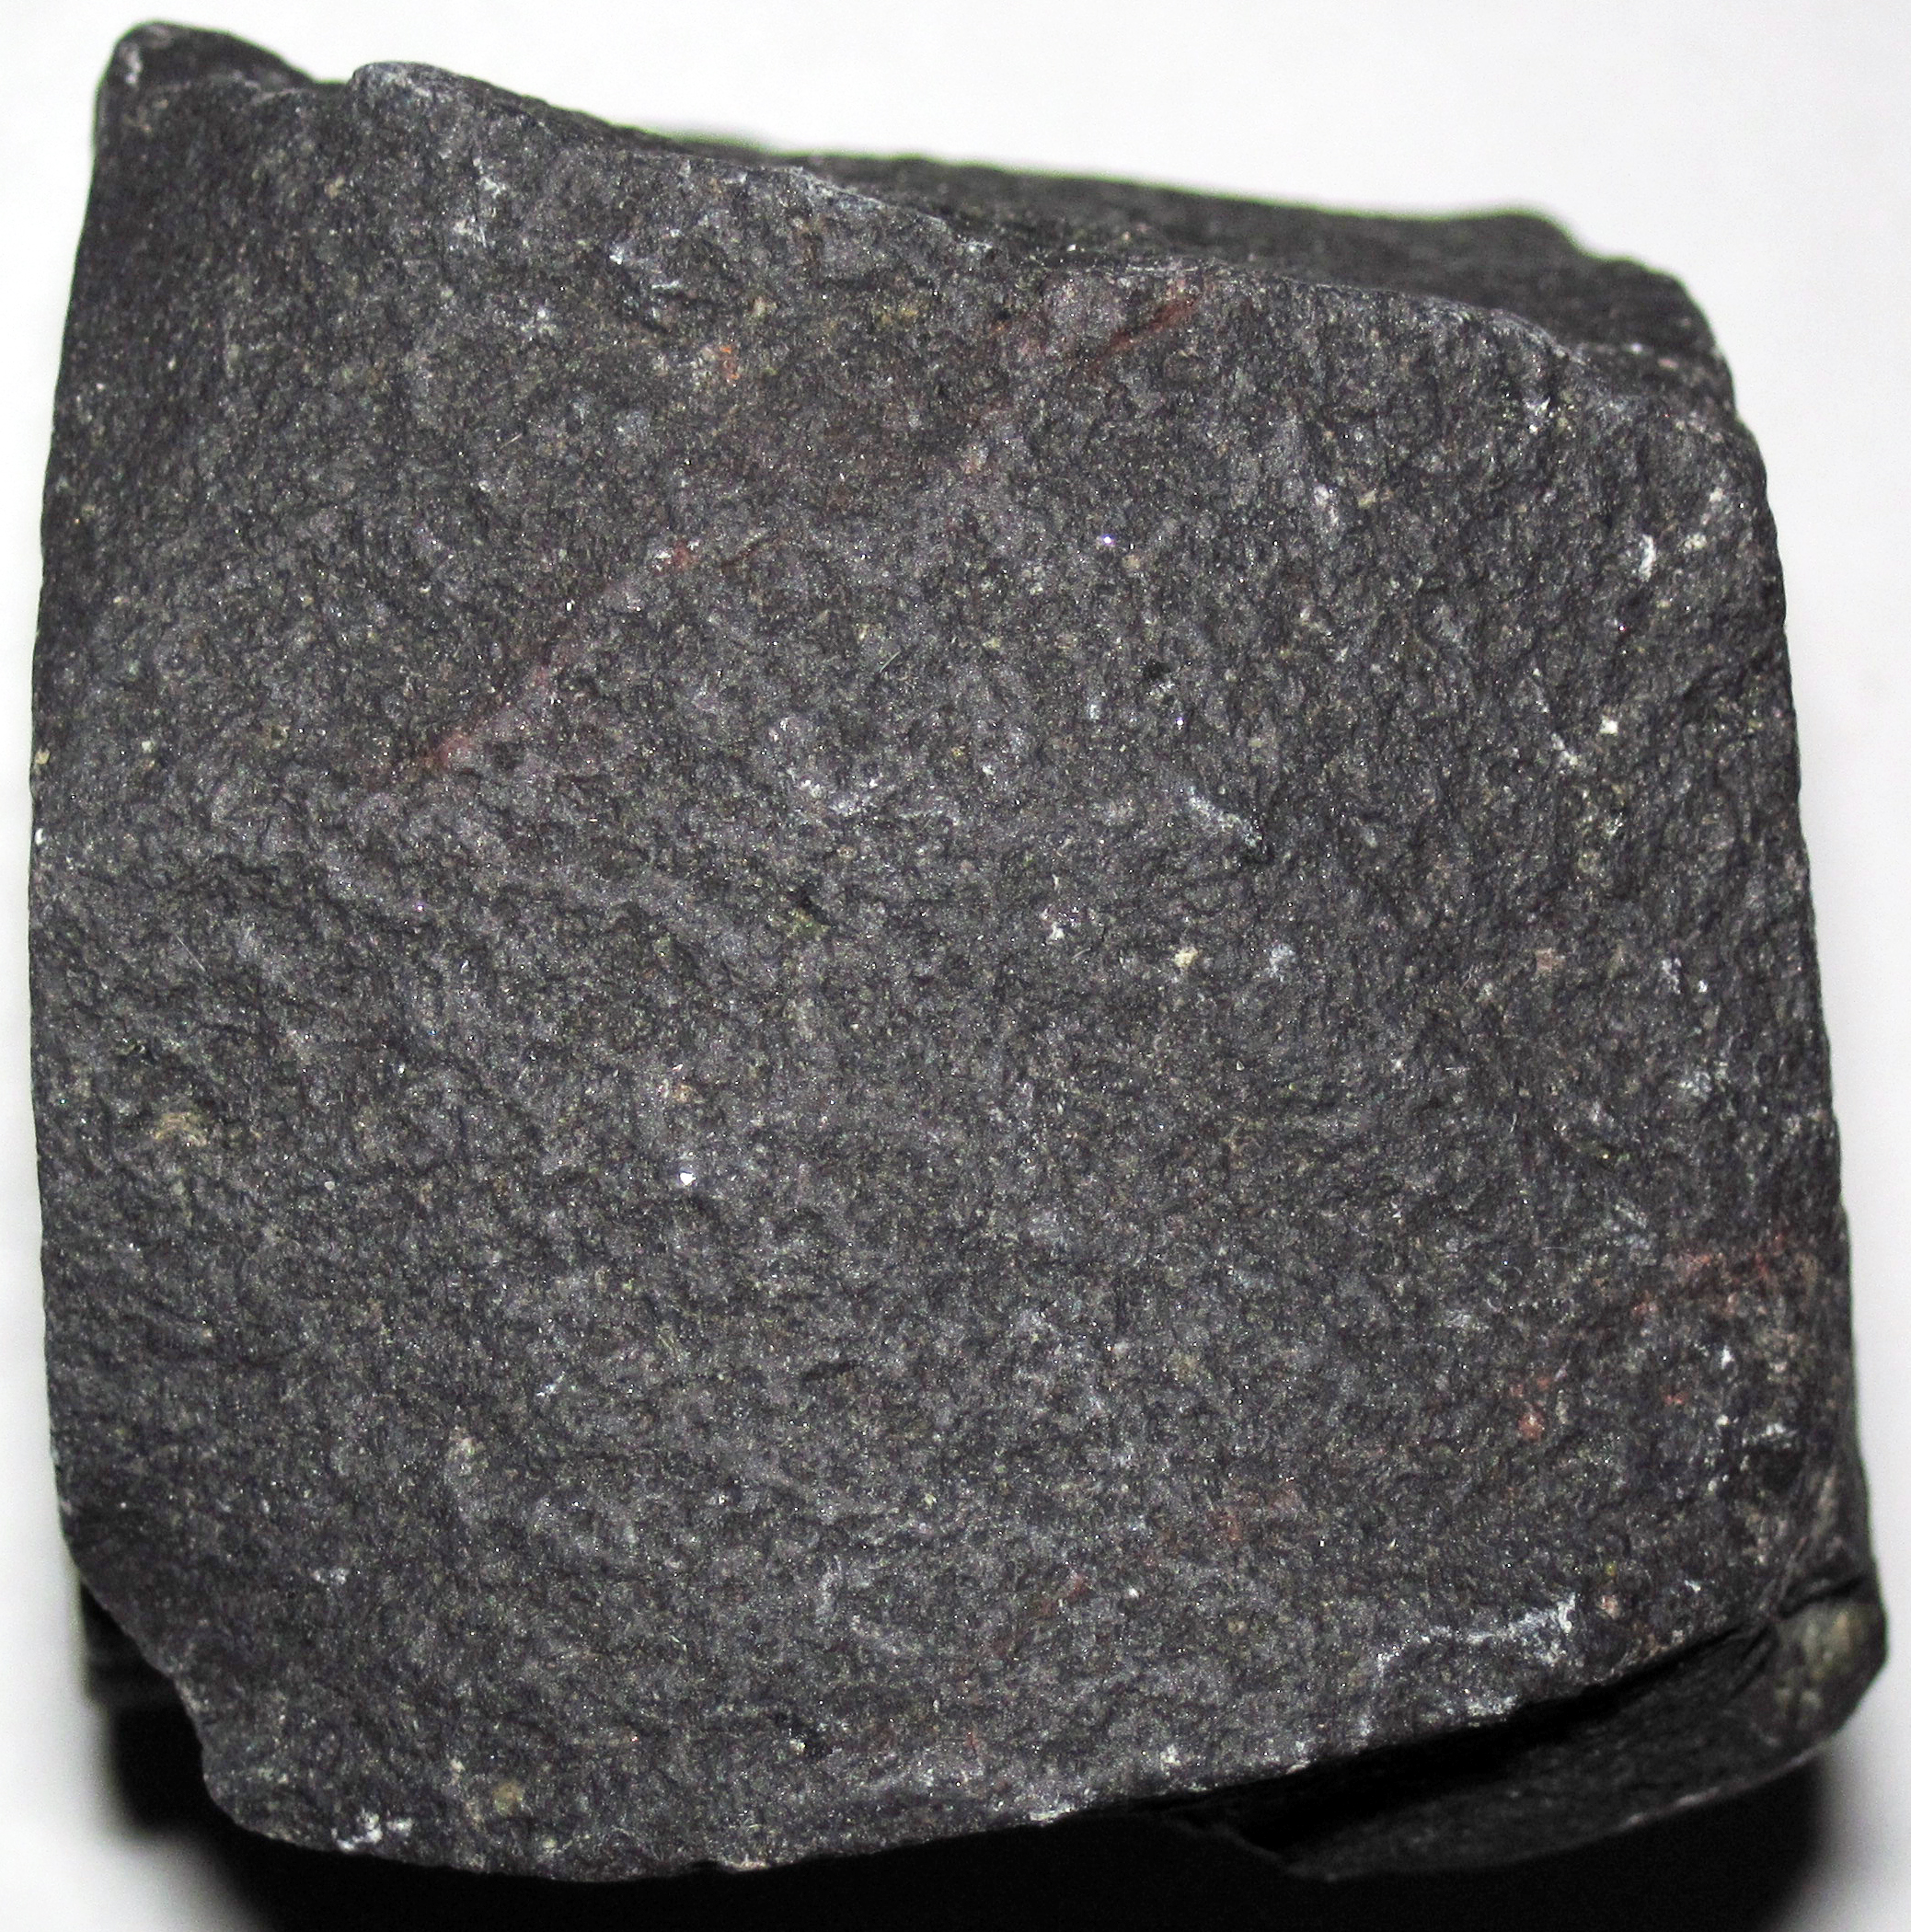 Show dark rock with no visible minerals